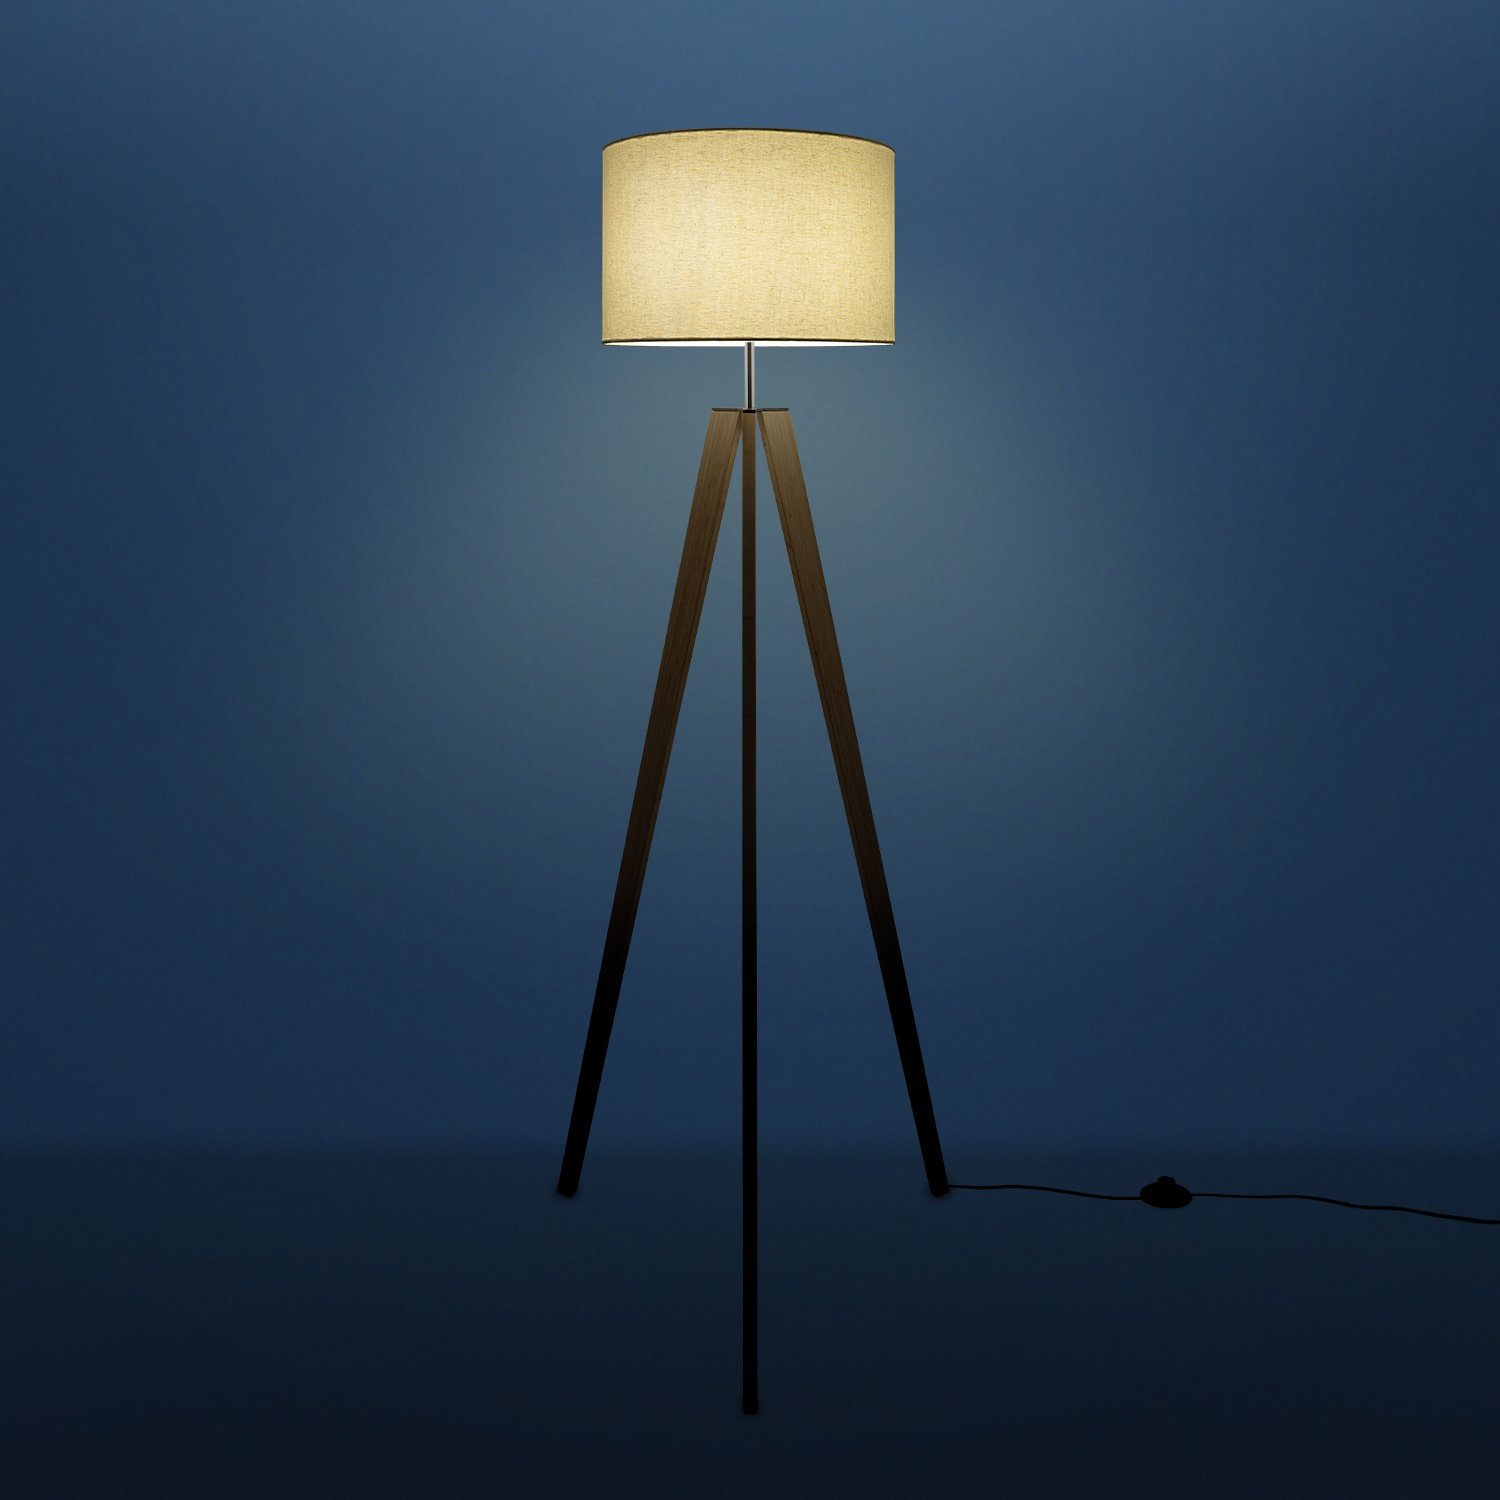 Stehlampe ohne Home uni LED Wohnzimmer Skandinavischer Stehlampe Leuchtmittel, Fuß Canvas Color, Paco Stil E27 Lampe Vintage